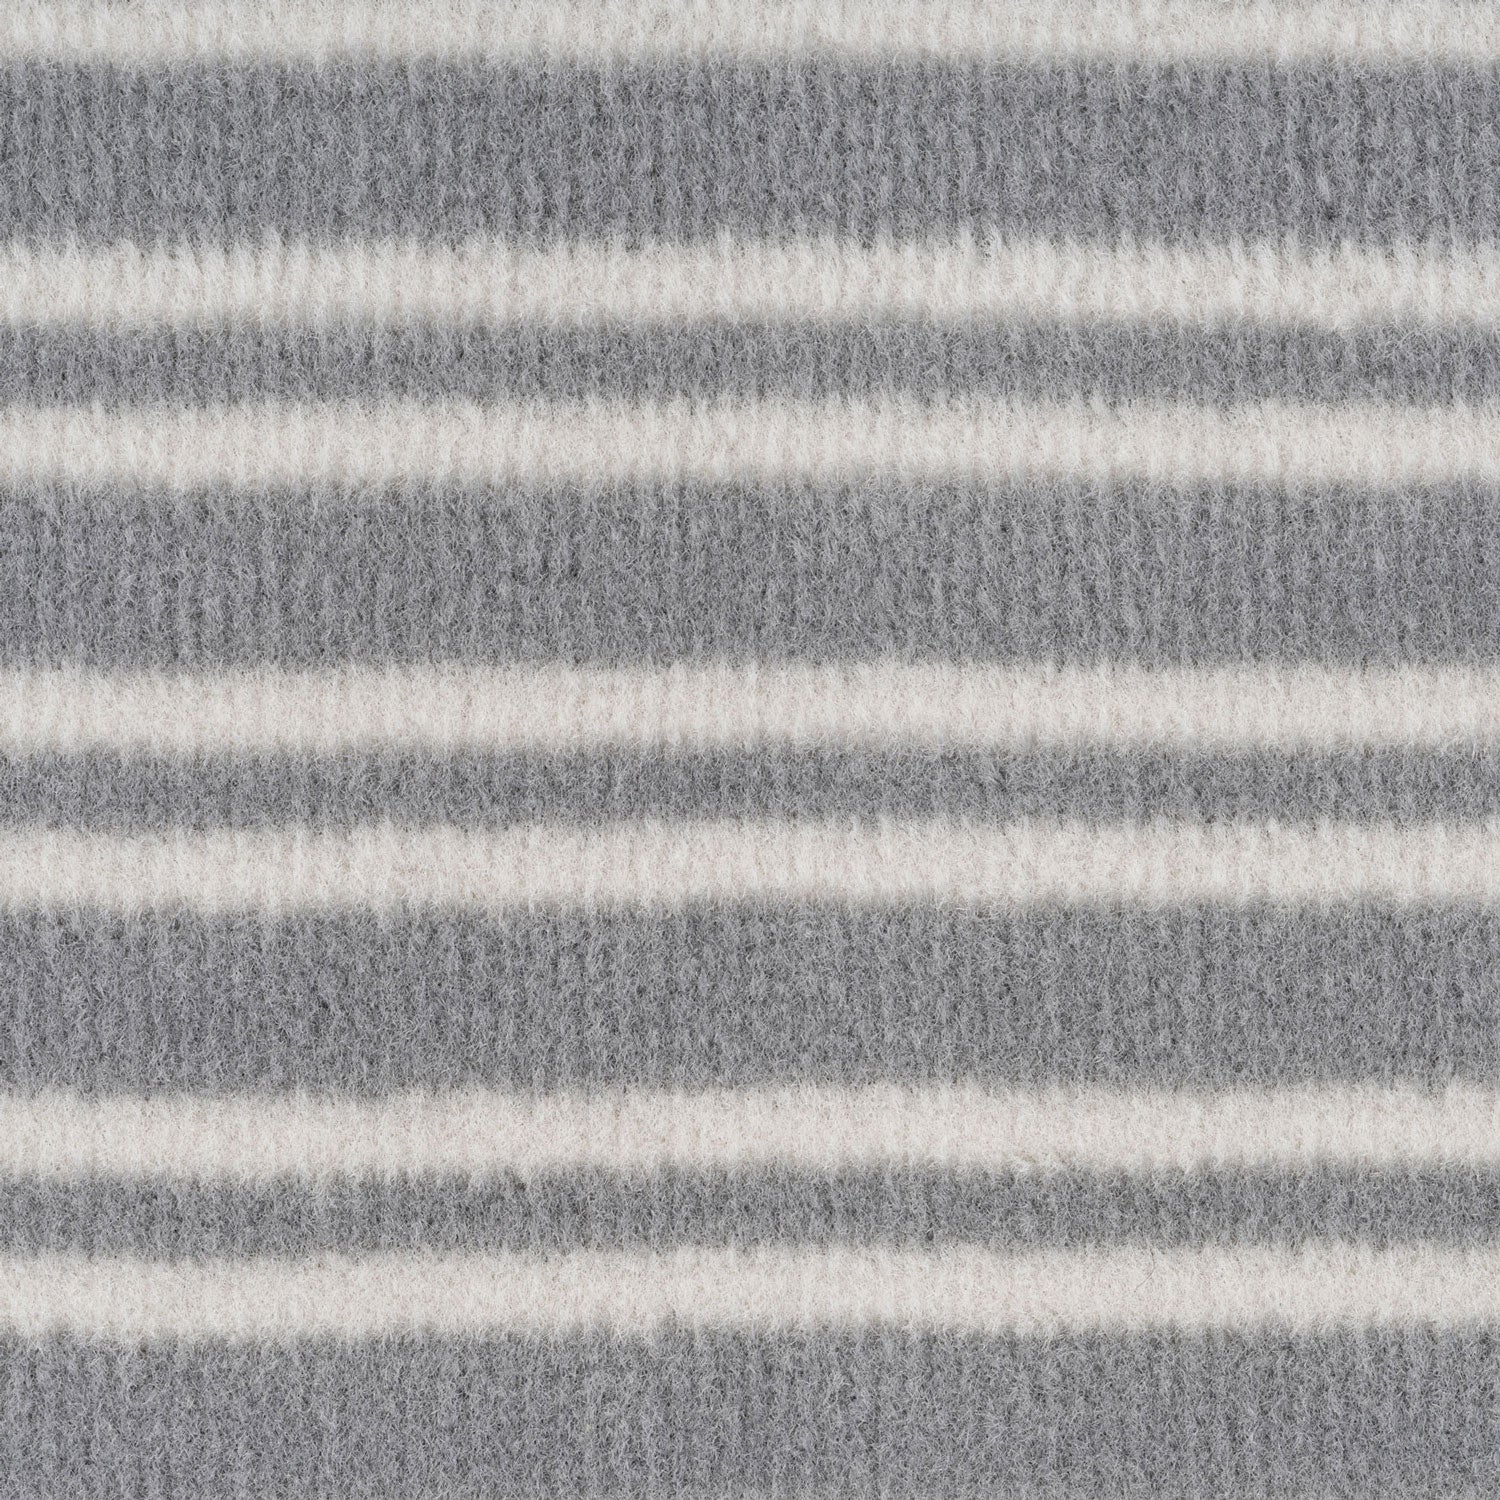 Grey Striped Stair Carpet Runner - Cut to Measure